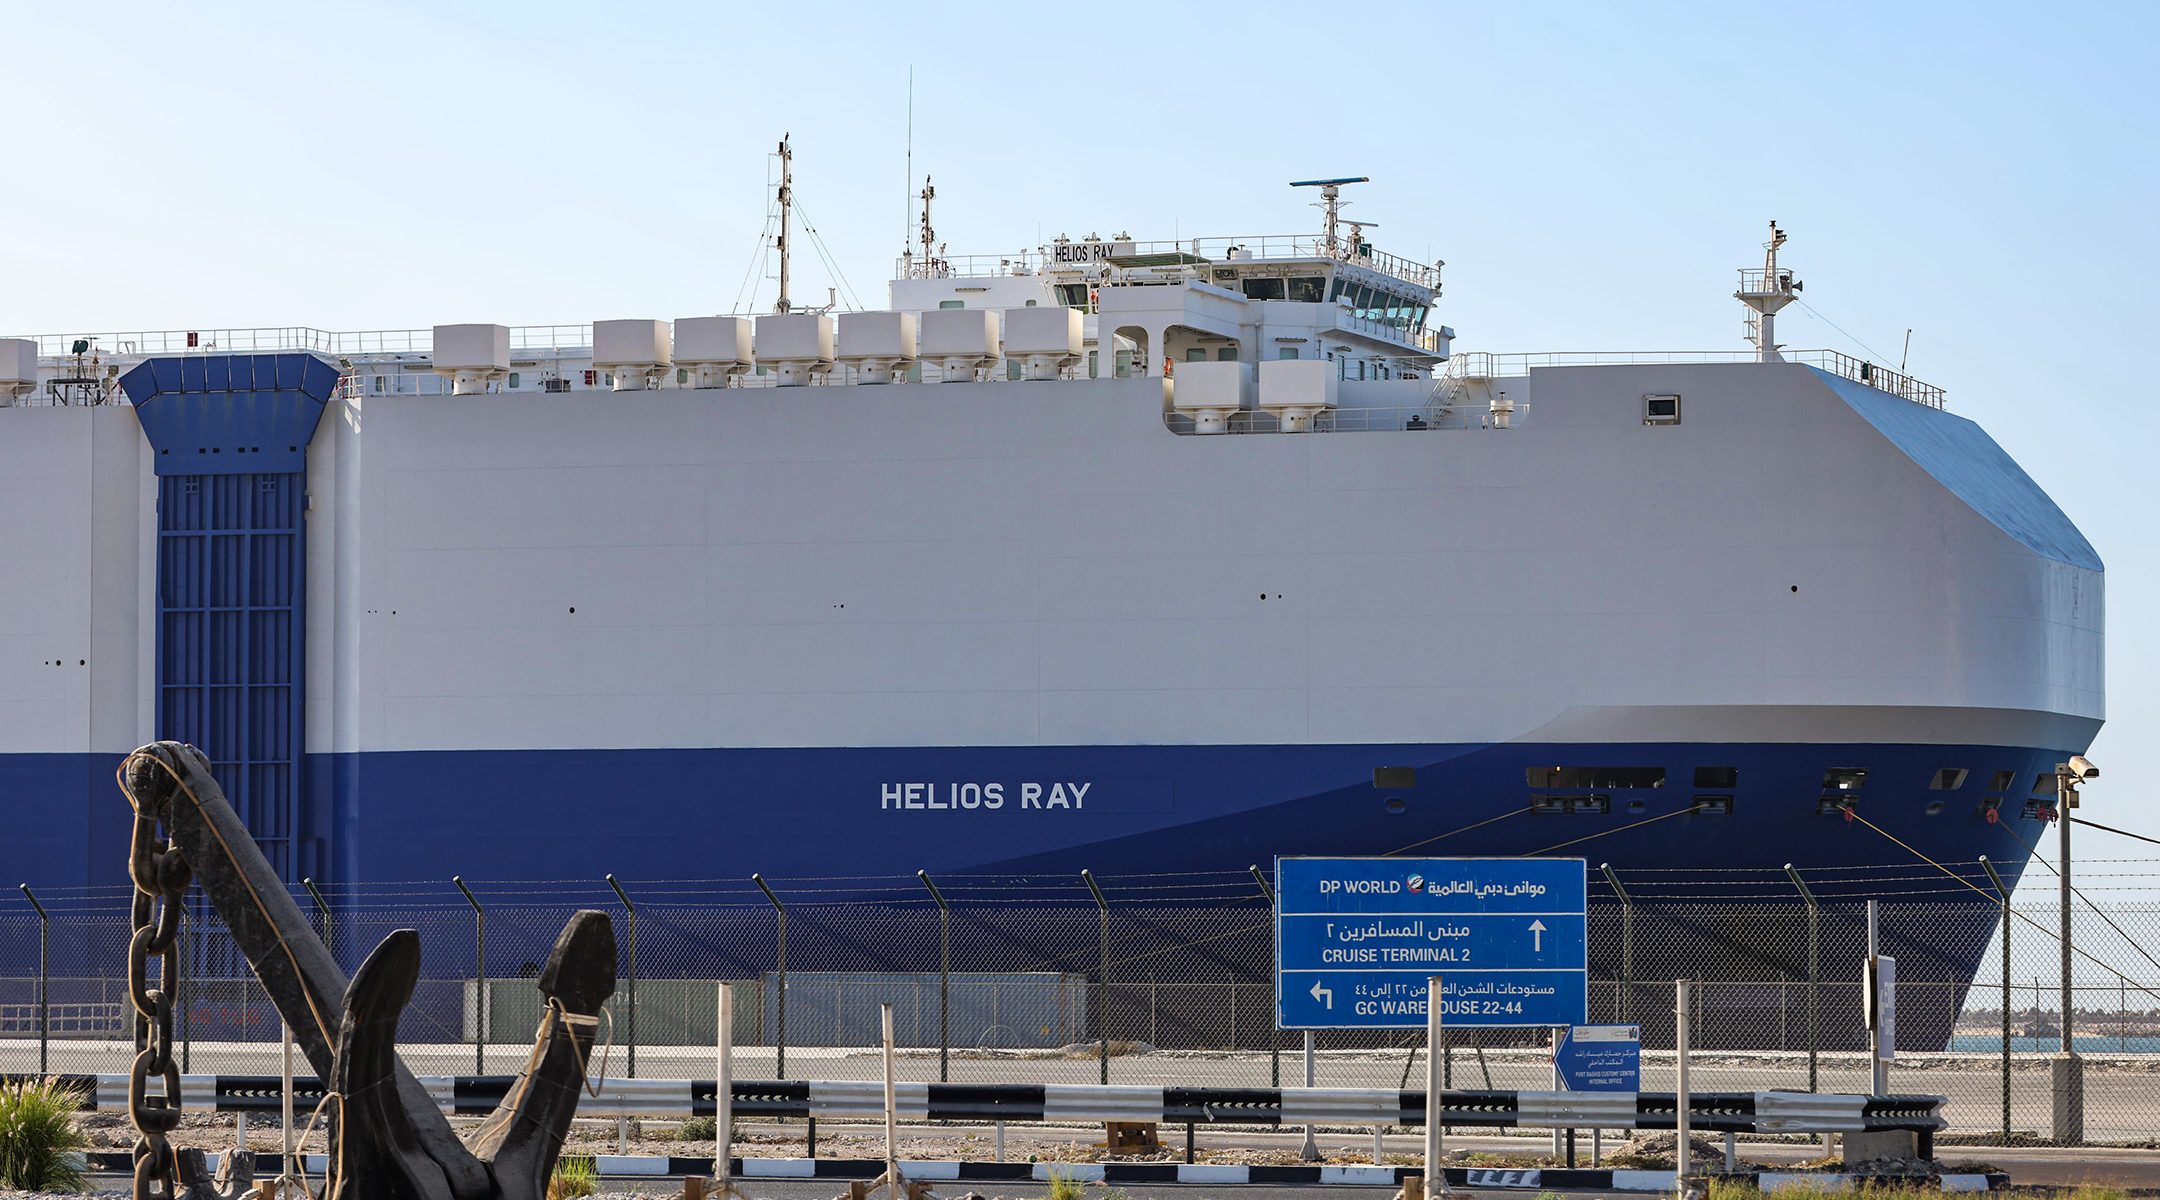 The Israeli-owned Bahamian-flagged MV Helios Ray cargo ship docks at the Mina Rashid cruise terminal of Dubai, the United Arab Emirates on Feb. 28, 2021. (Giuseppe Cacace / AFP via Getty Images)